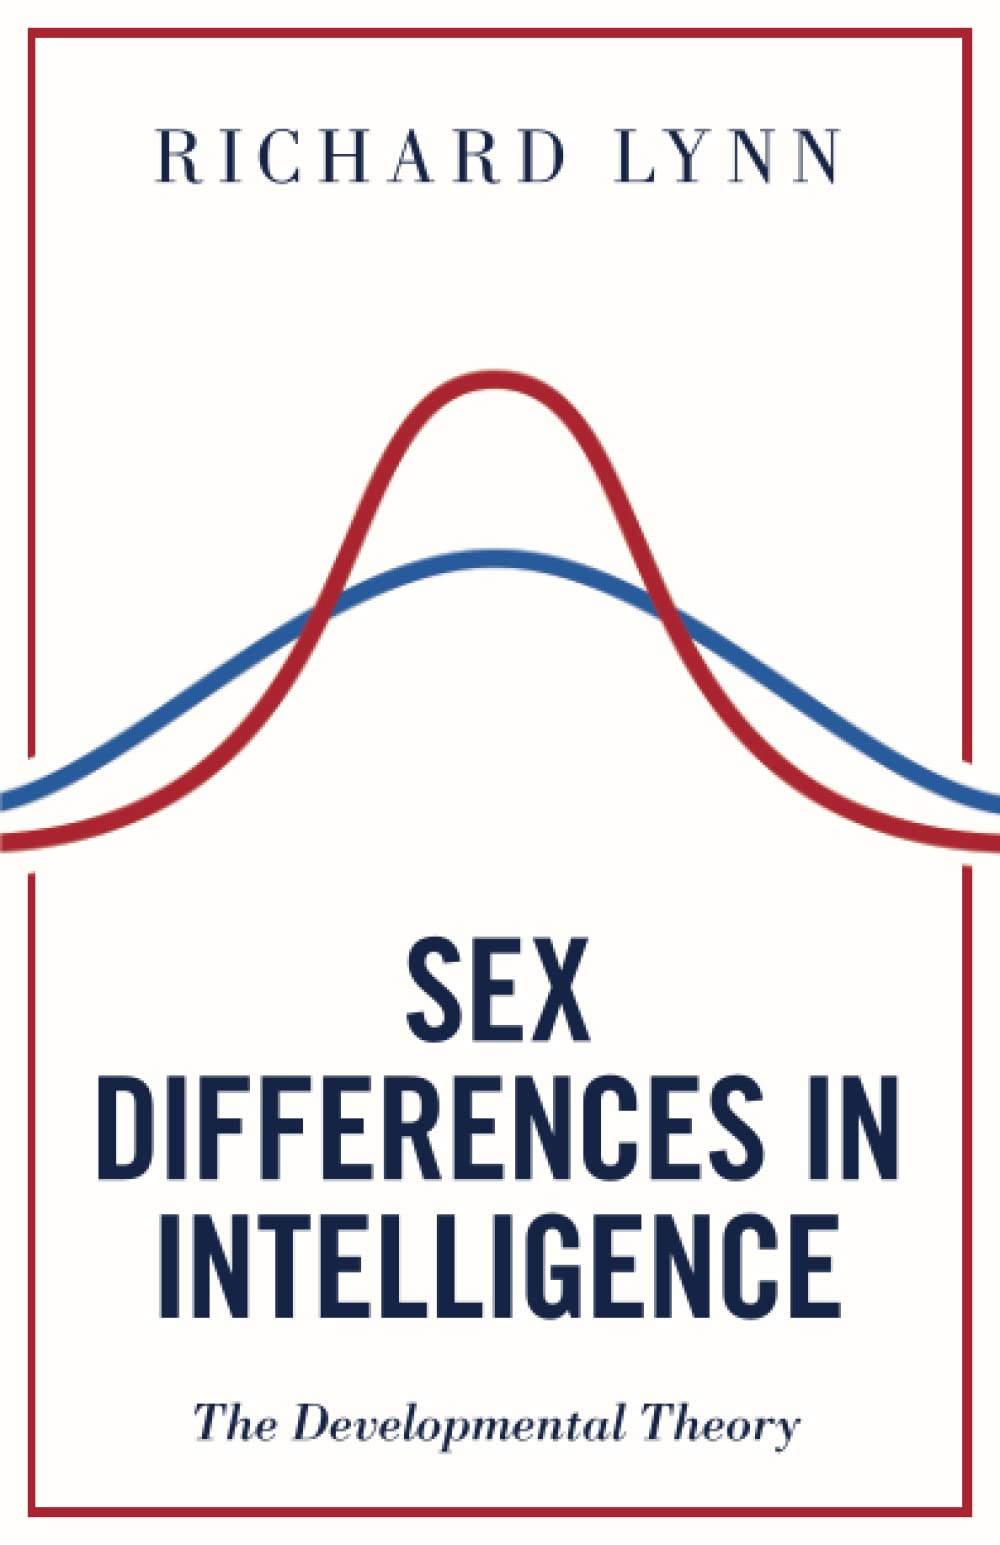 Sex Differences in Intelligence, by Richard Lynn.jpg